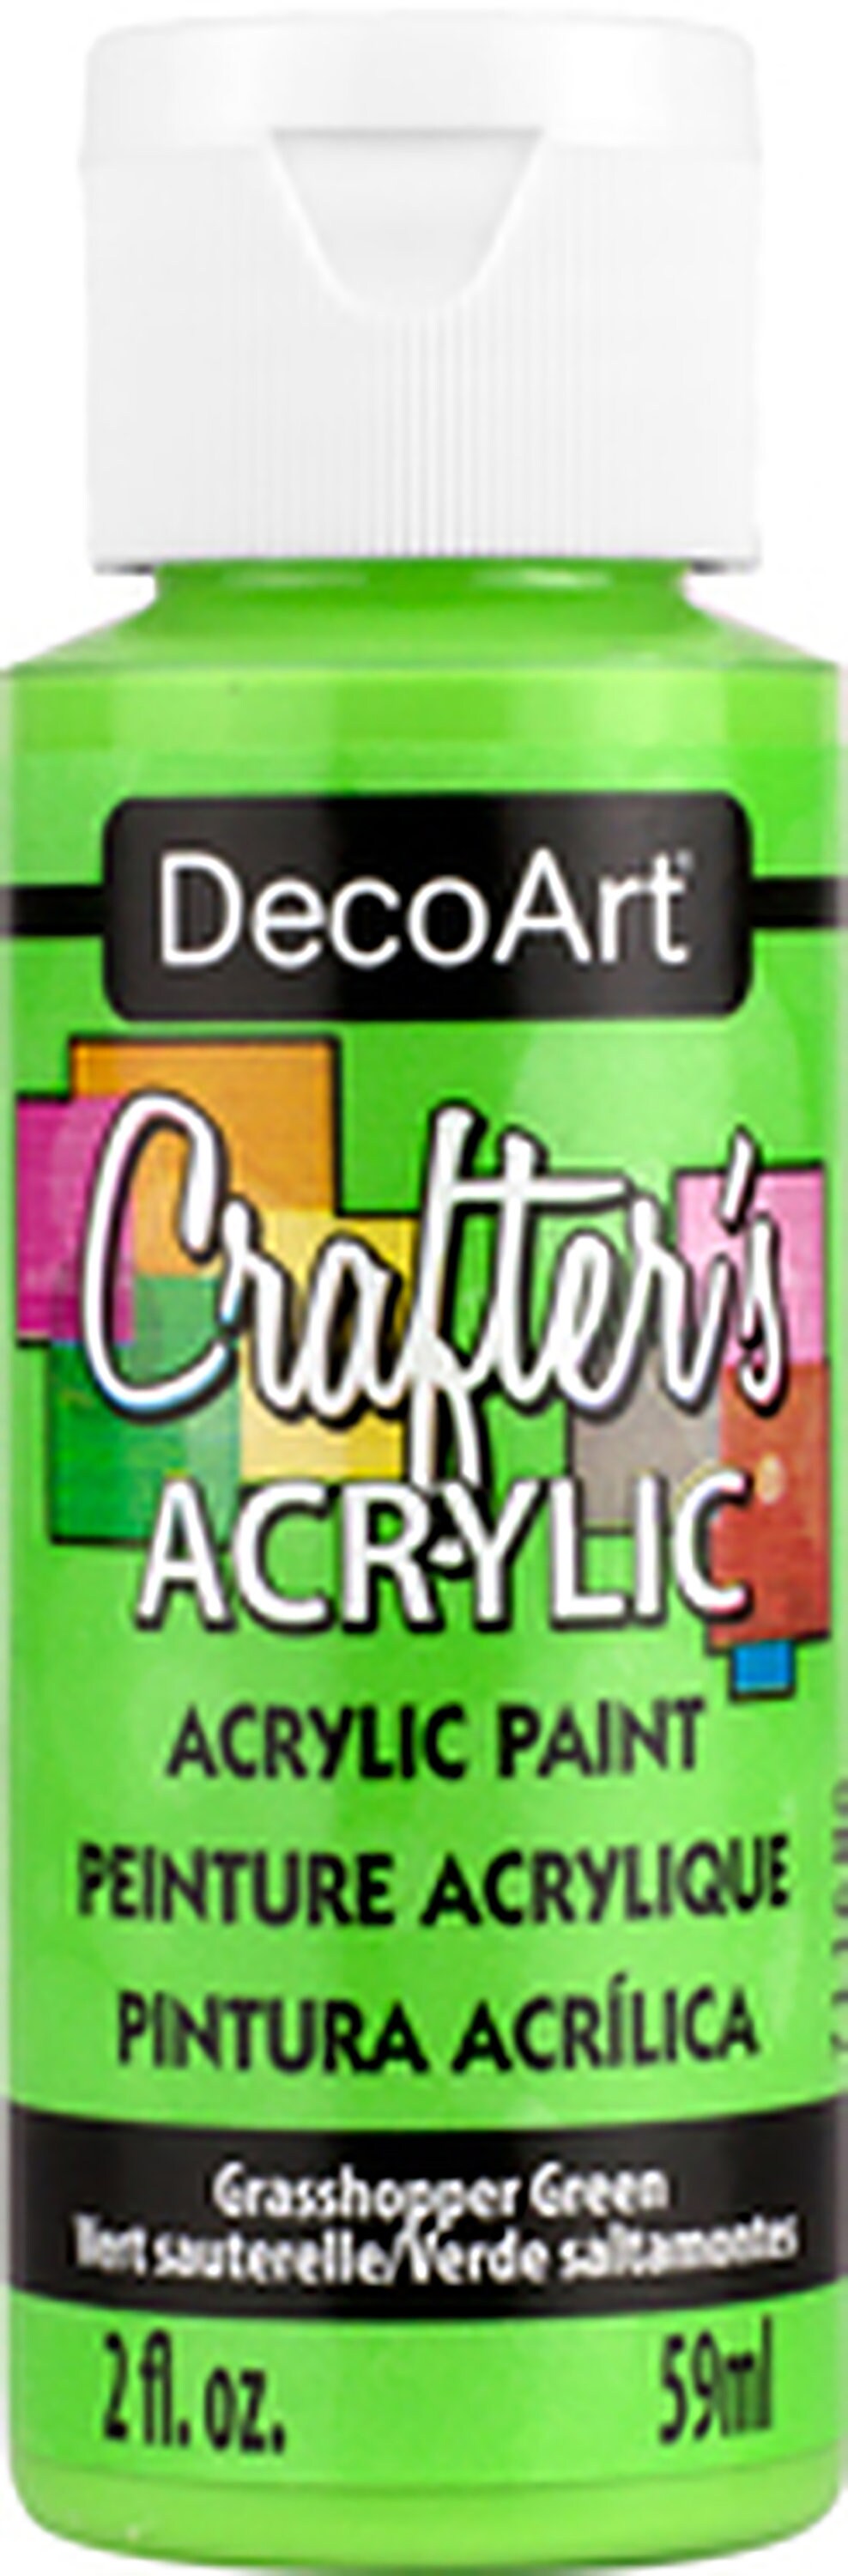 Decoart Crafters Acrylic Paints Yellow Tones 59ml 2oz Bottles